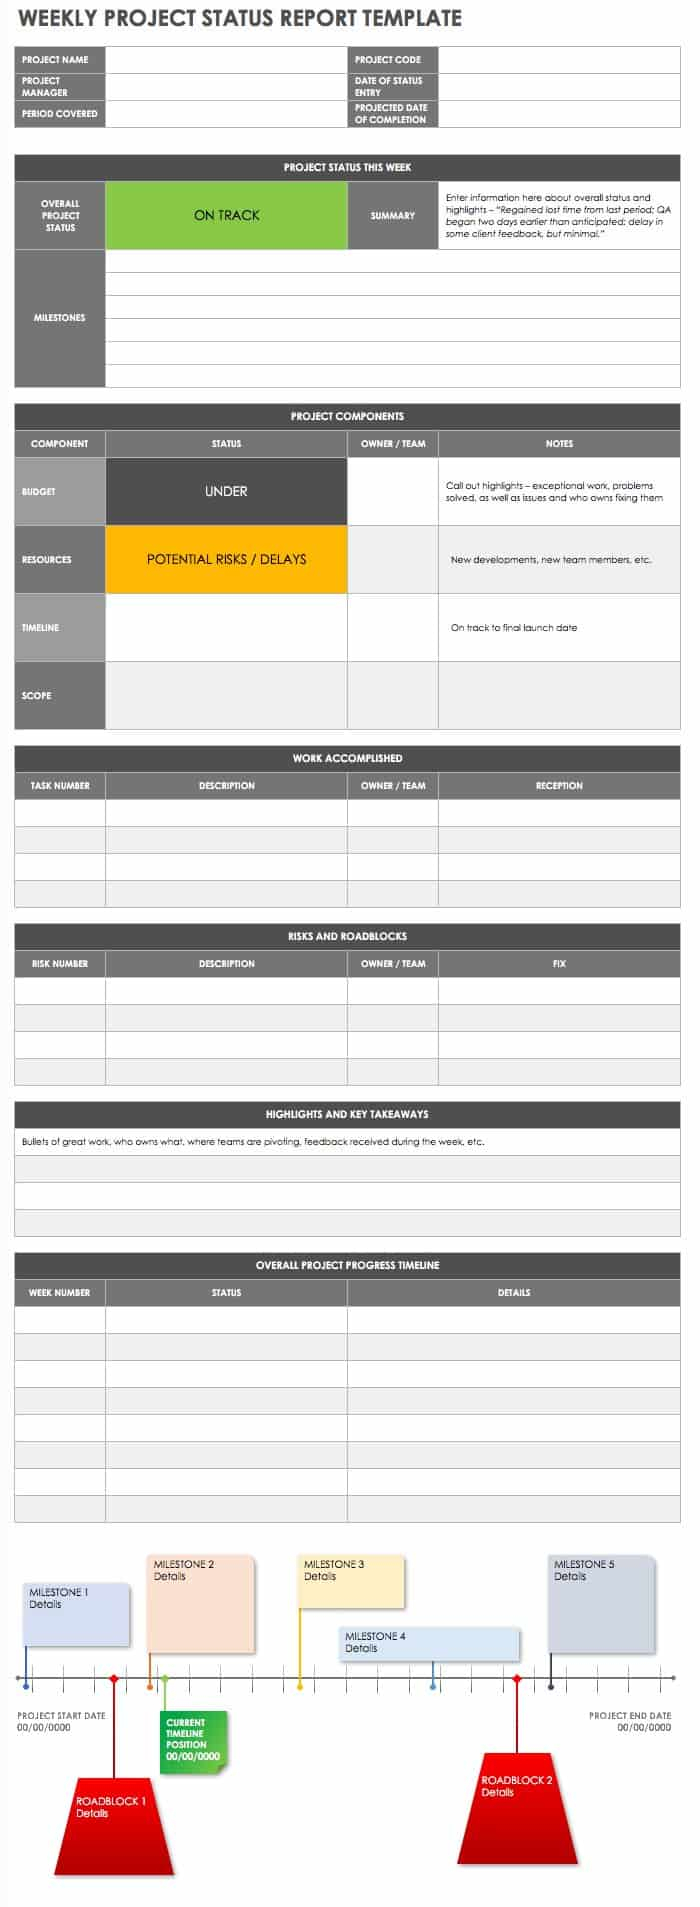 Free Project Report Templates | Smartsheet Within Weekly Project Status Report Template Powerpoint